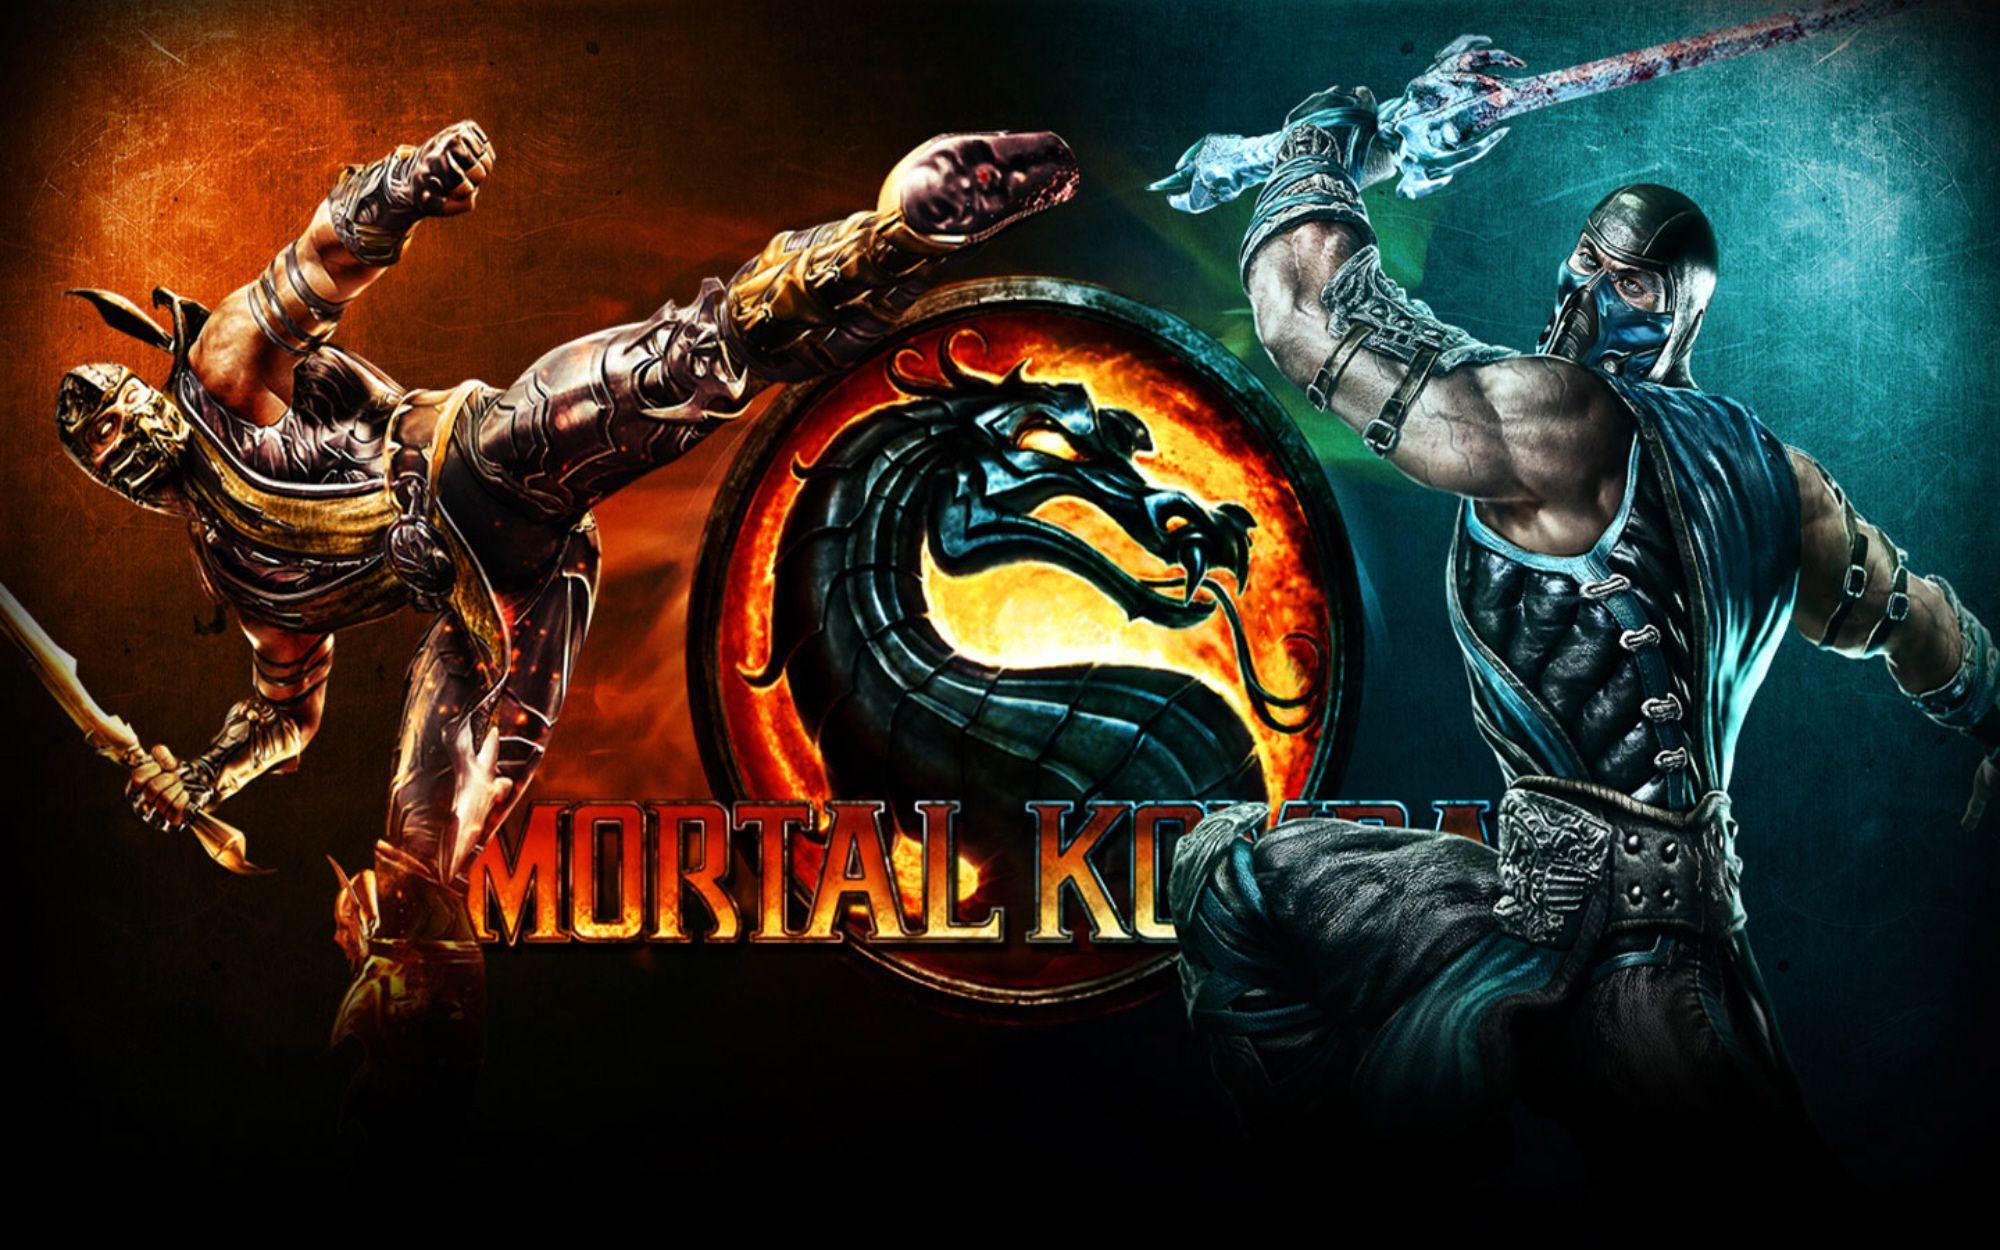 Mortal Kombat Scorpion Vs Sub Zero cakepins.com. Peyton